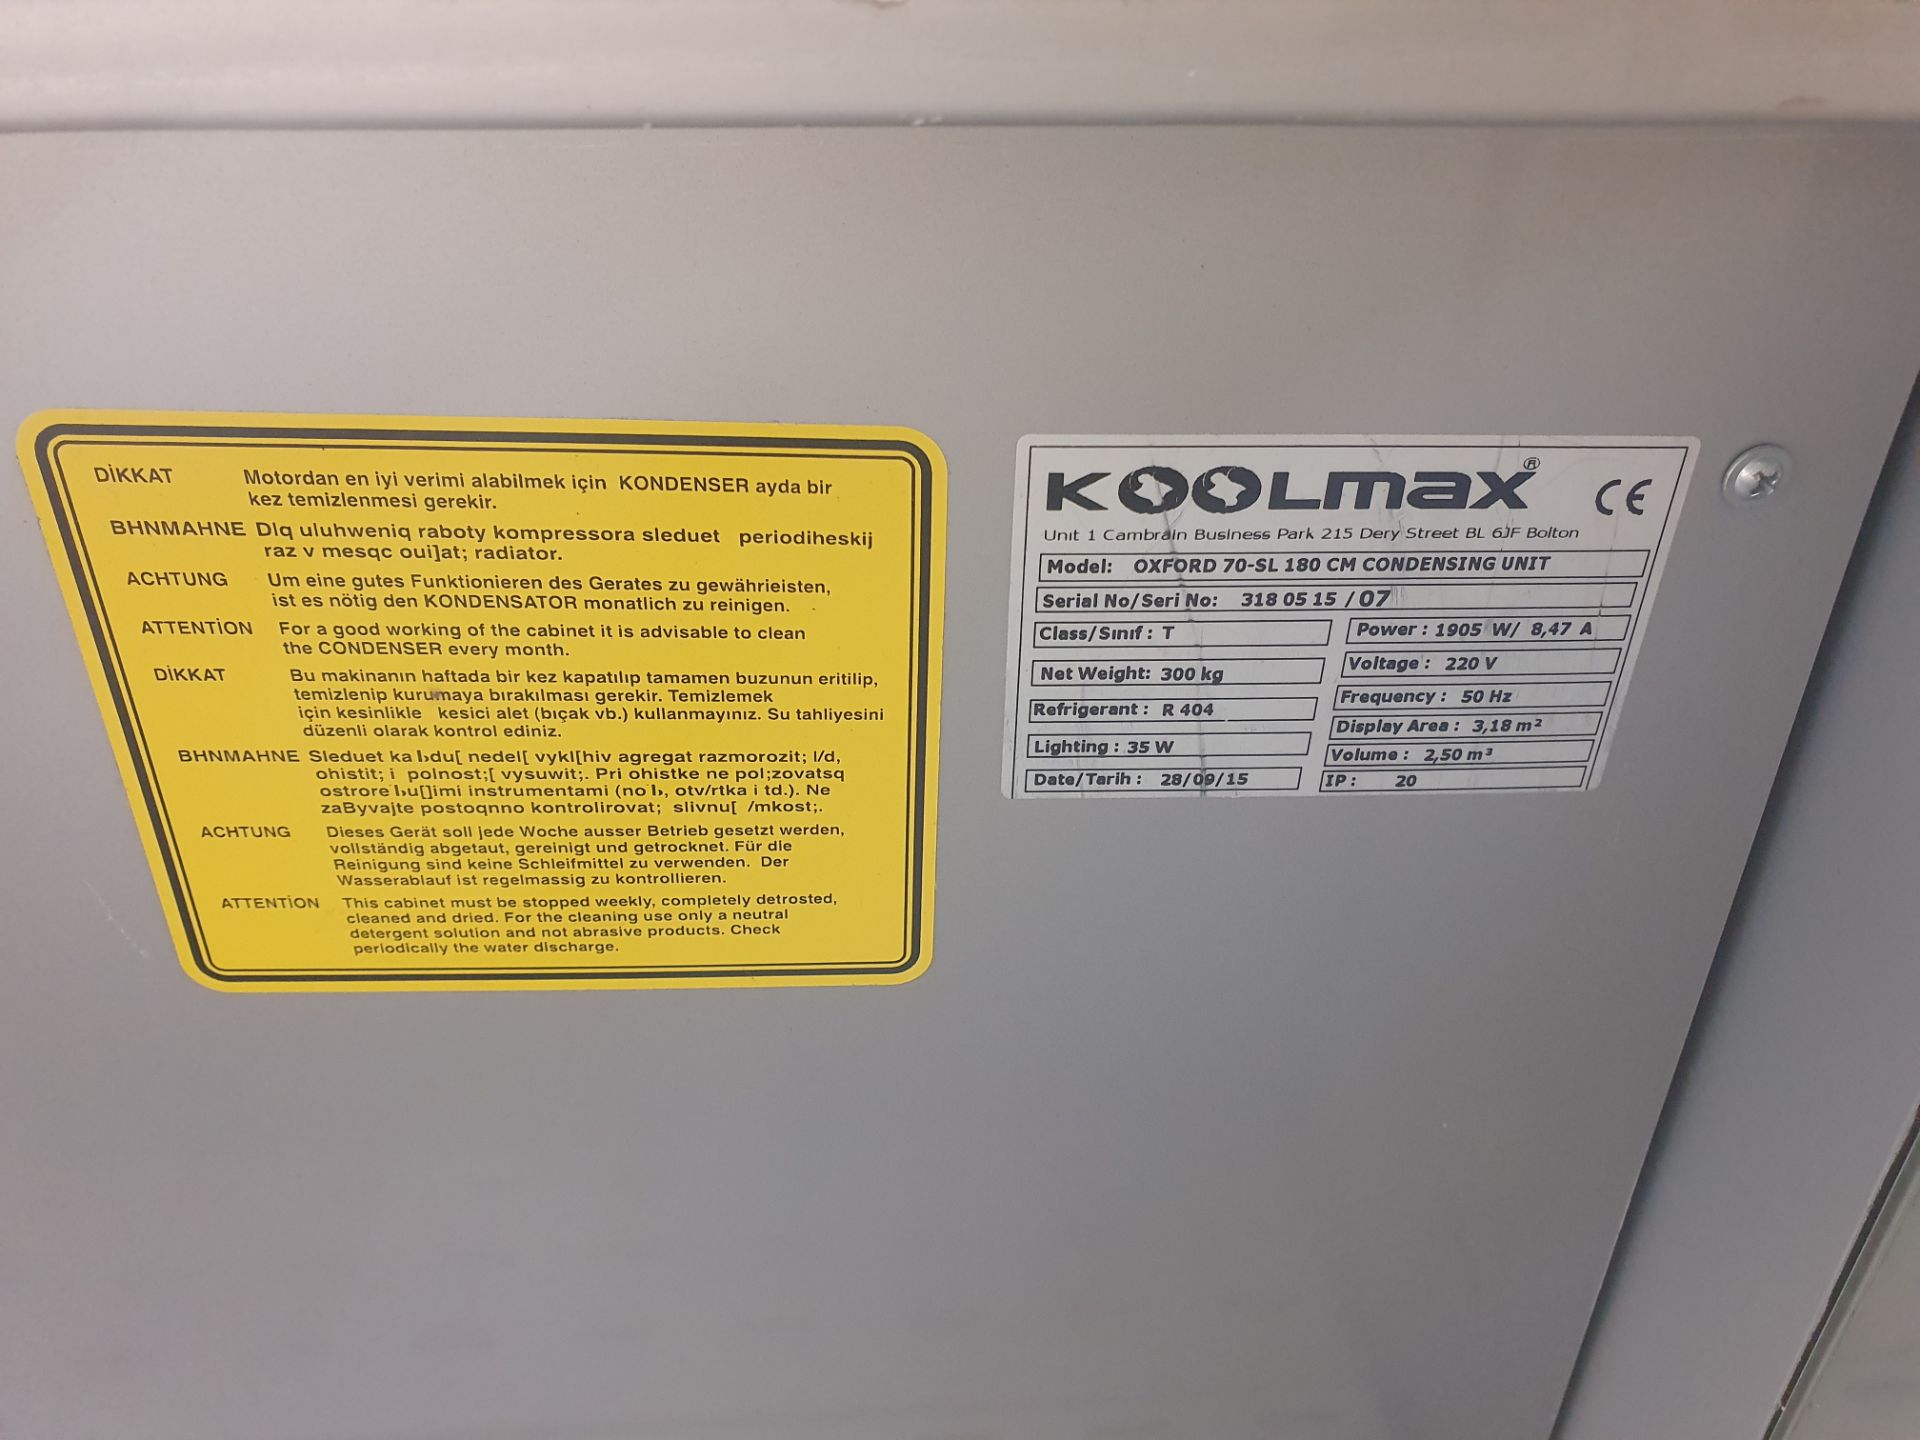 *Koolmax Boxford 70-SL -108 slimline integral multideck chiller with lights and night blind - tested - Image 3 of 4